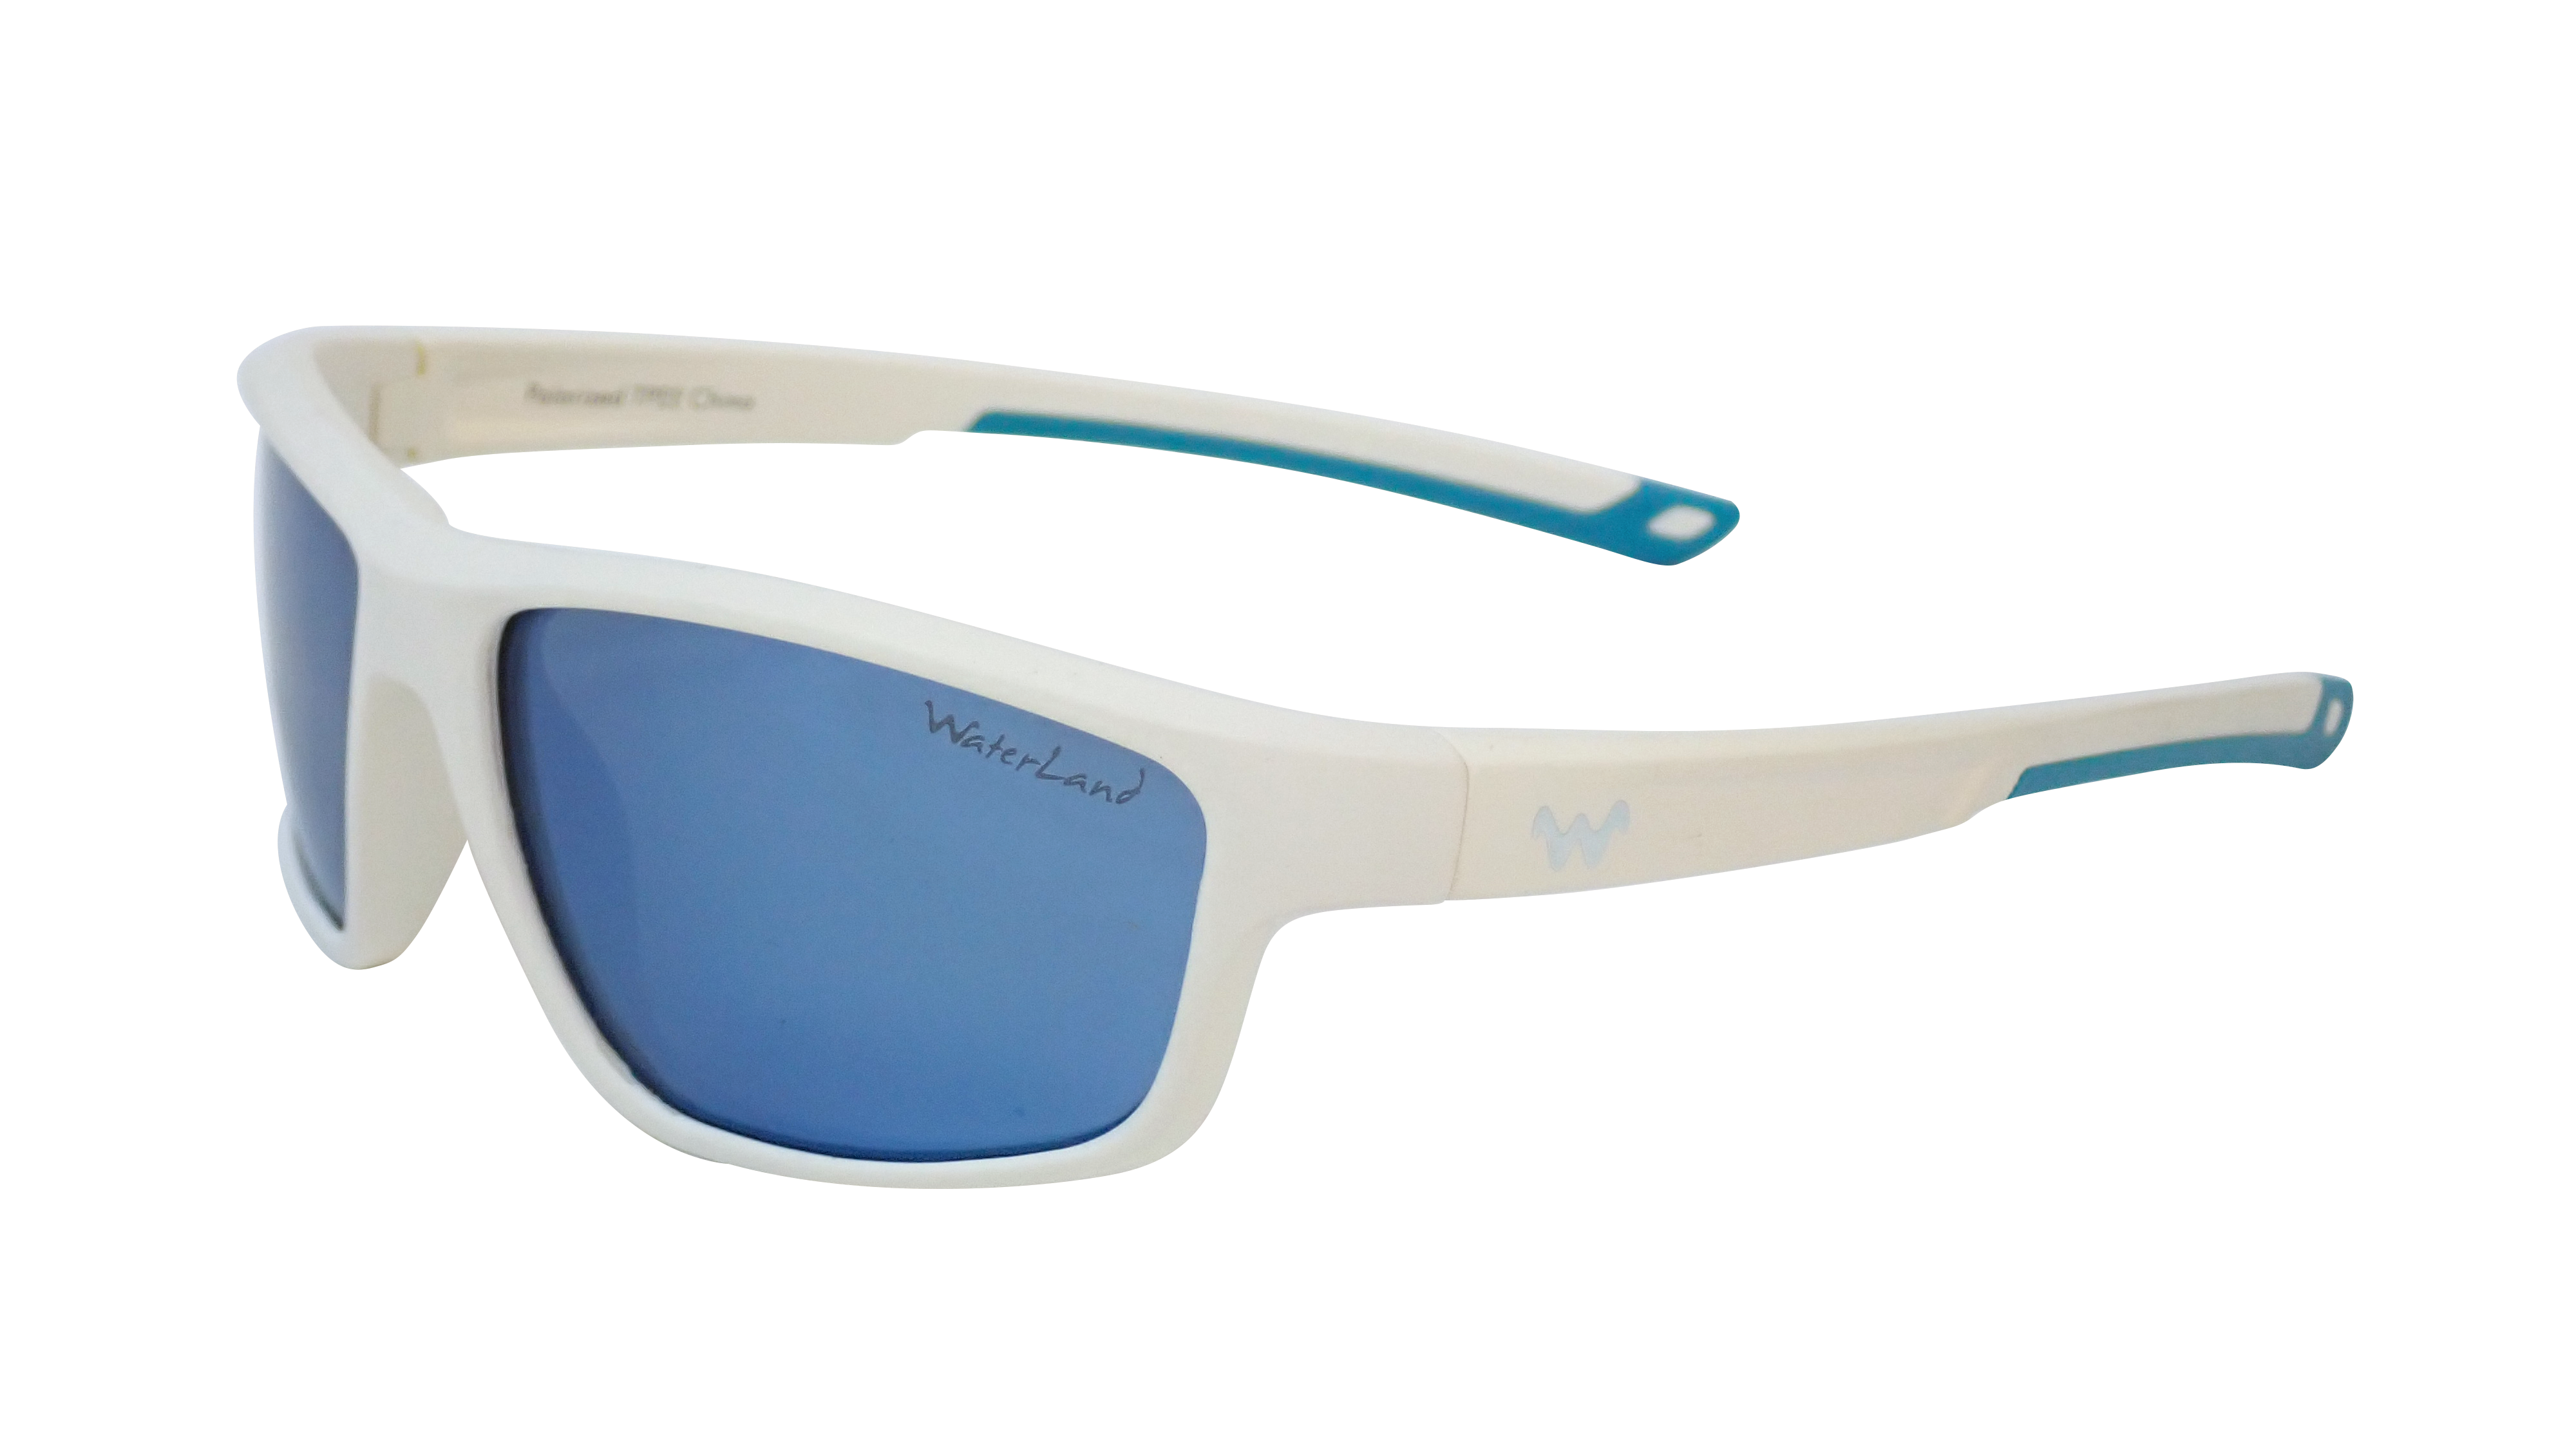 Waterland Polarized Sunglasses - KidFisher Series - Matte White